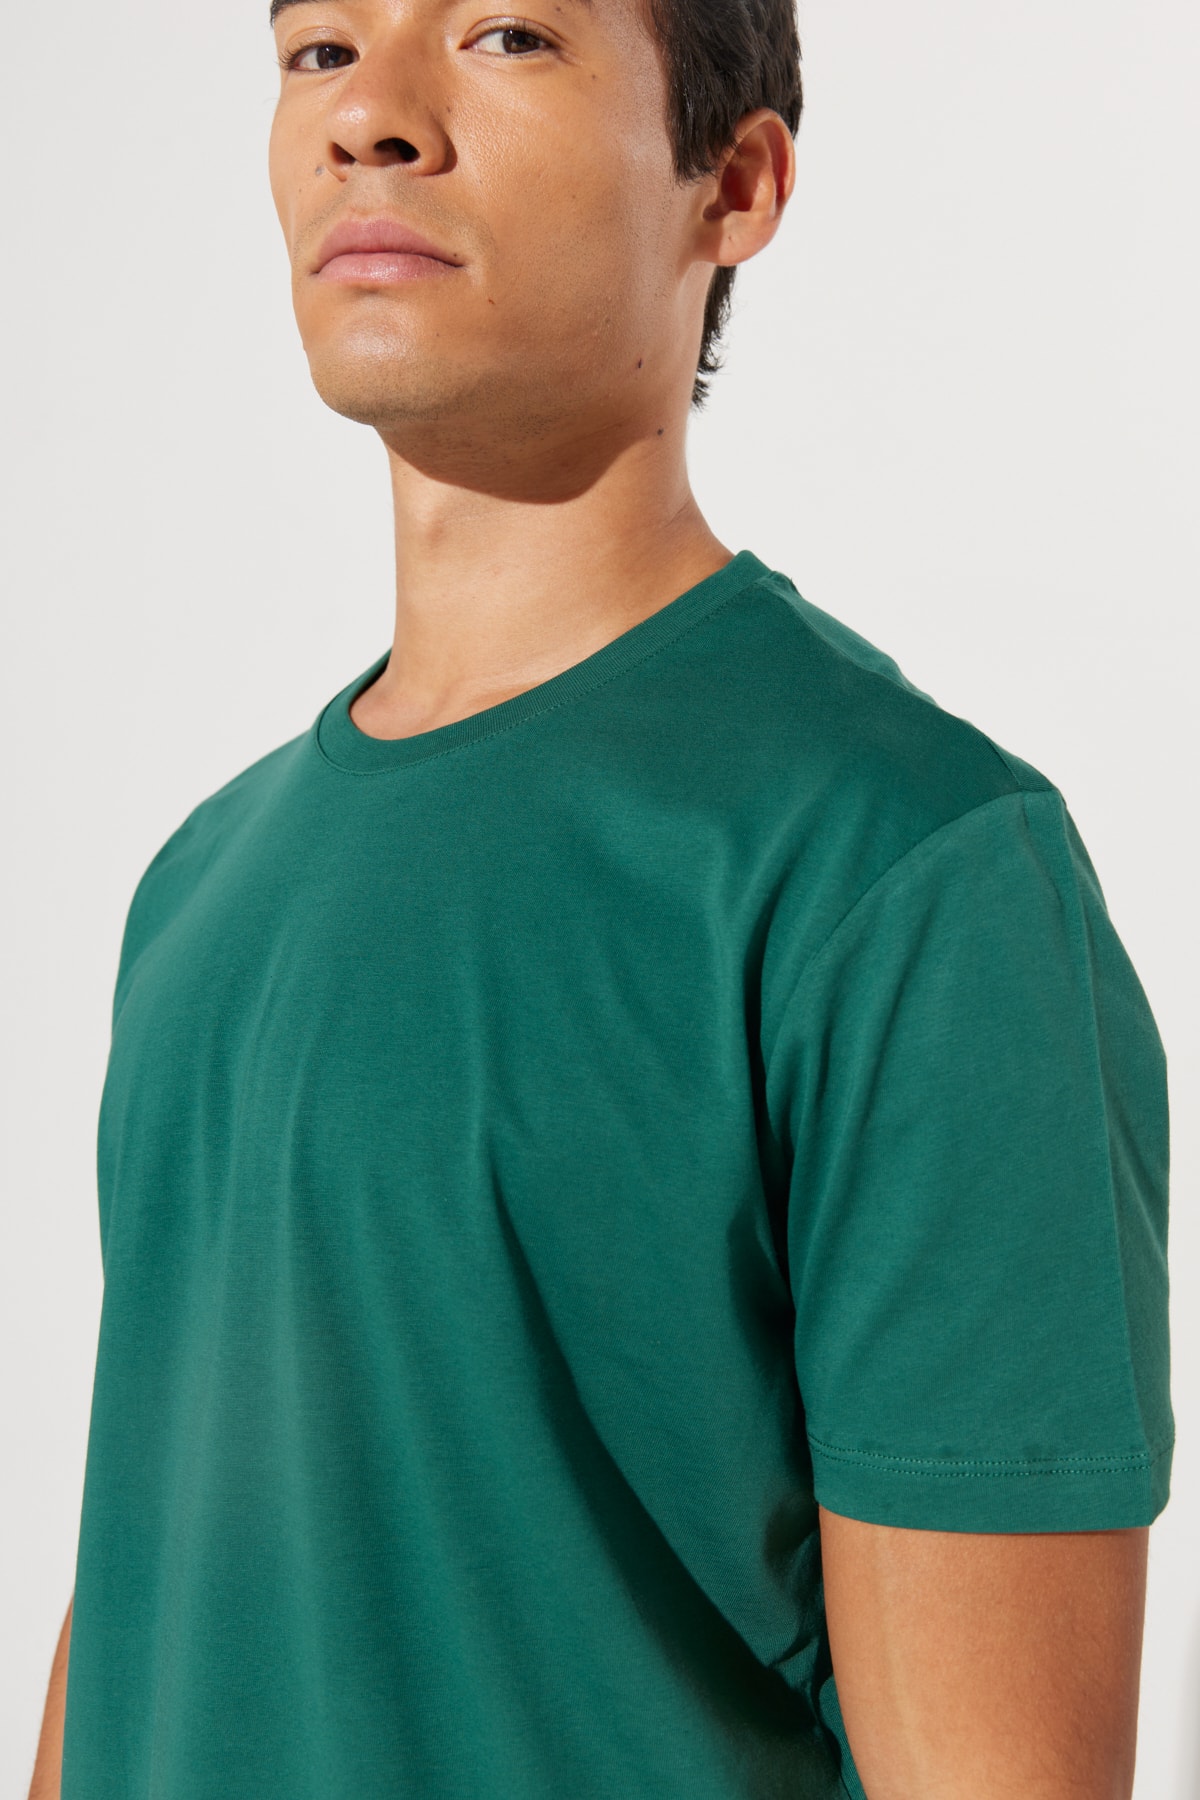 AC&Co / Altınyıldız Classics تی شرت آستین کوتاه یقه خدمه مردانه سبز تیره با برش باریک 100% نخی